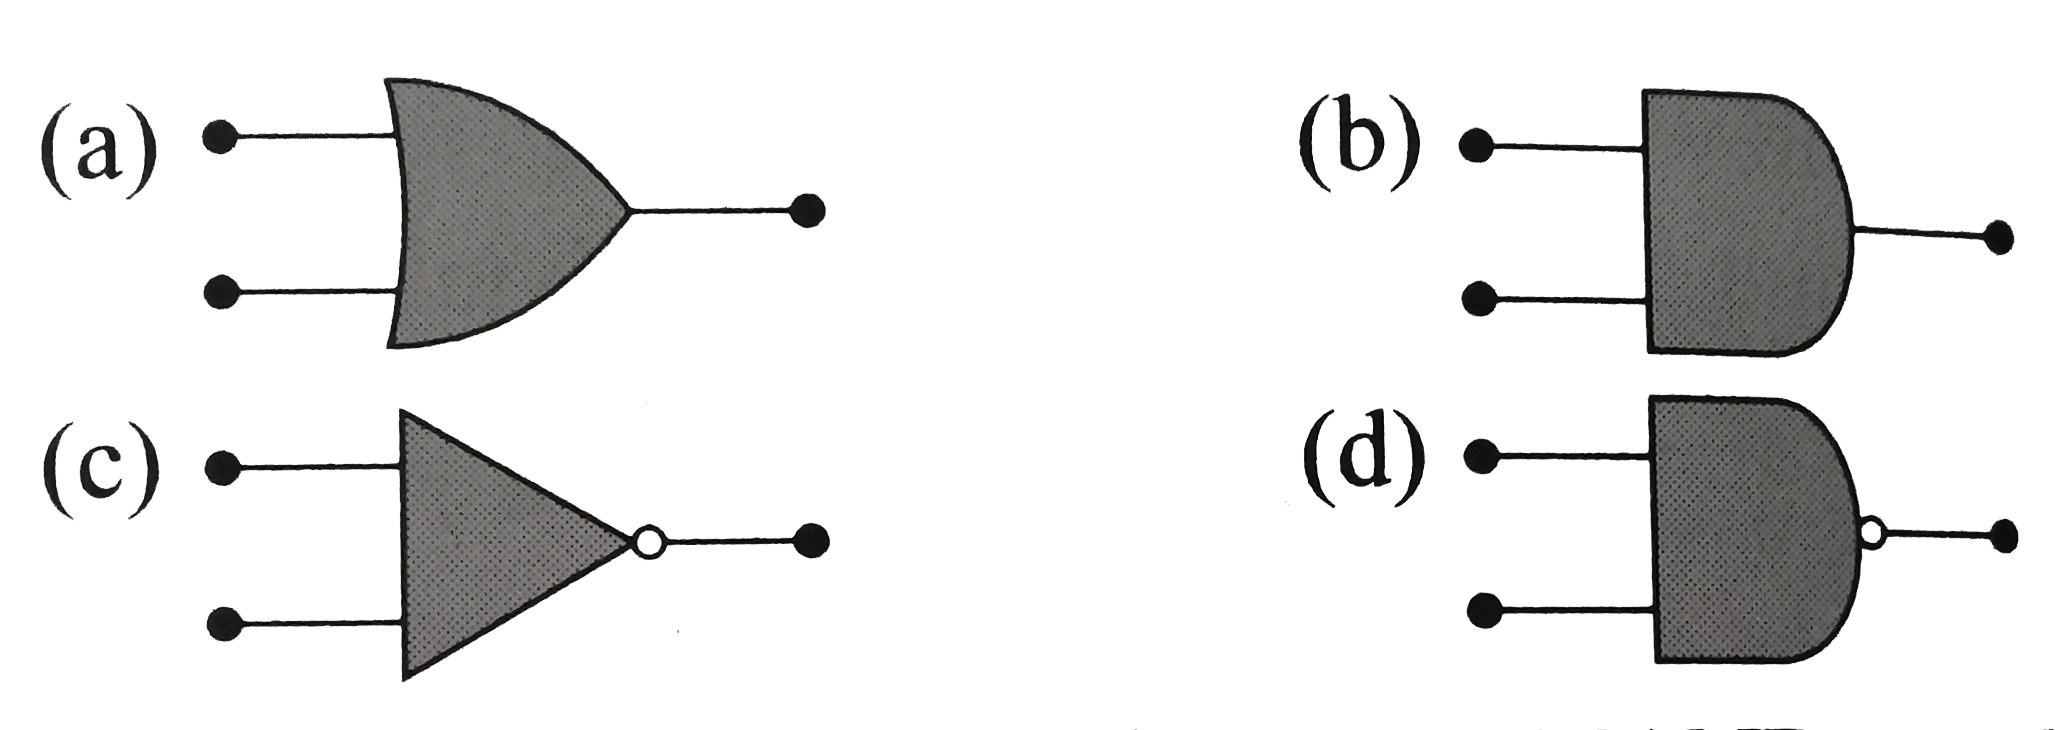 Symbolic representation of four logic gates are shown as